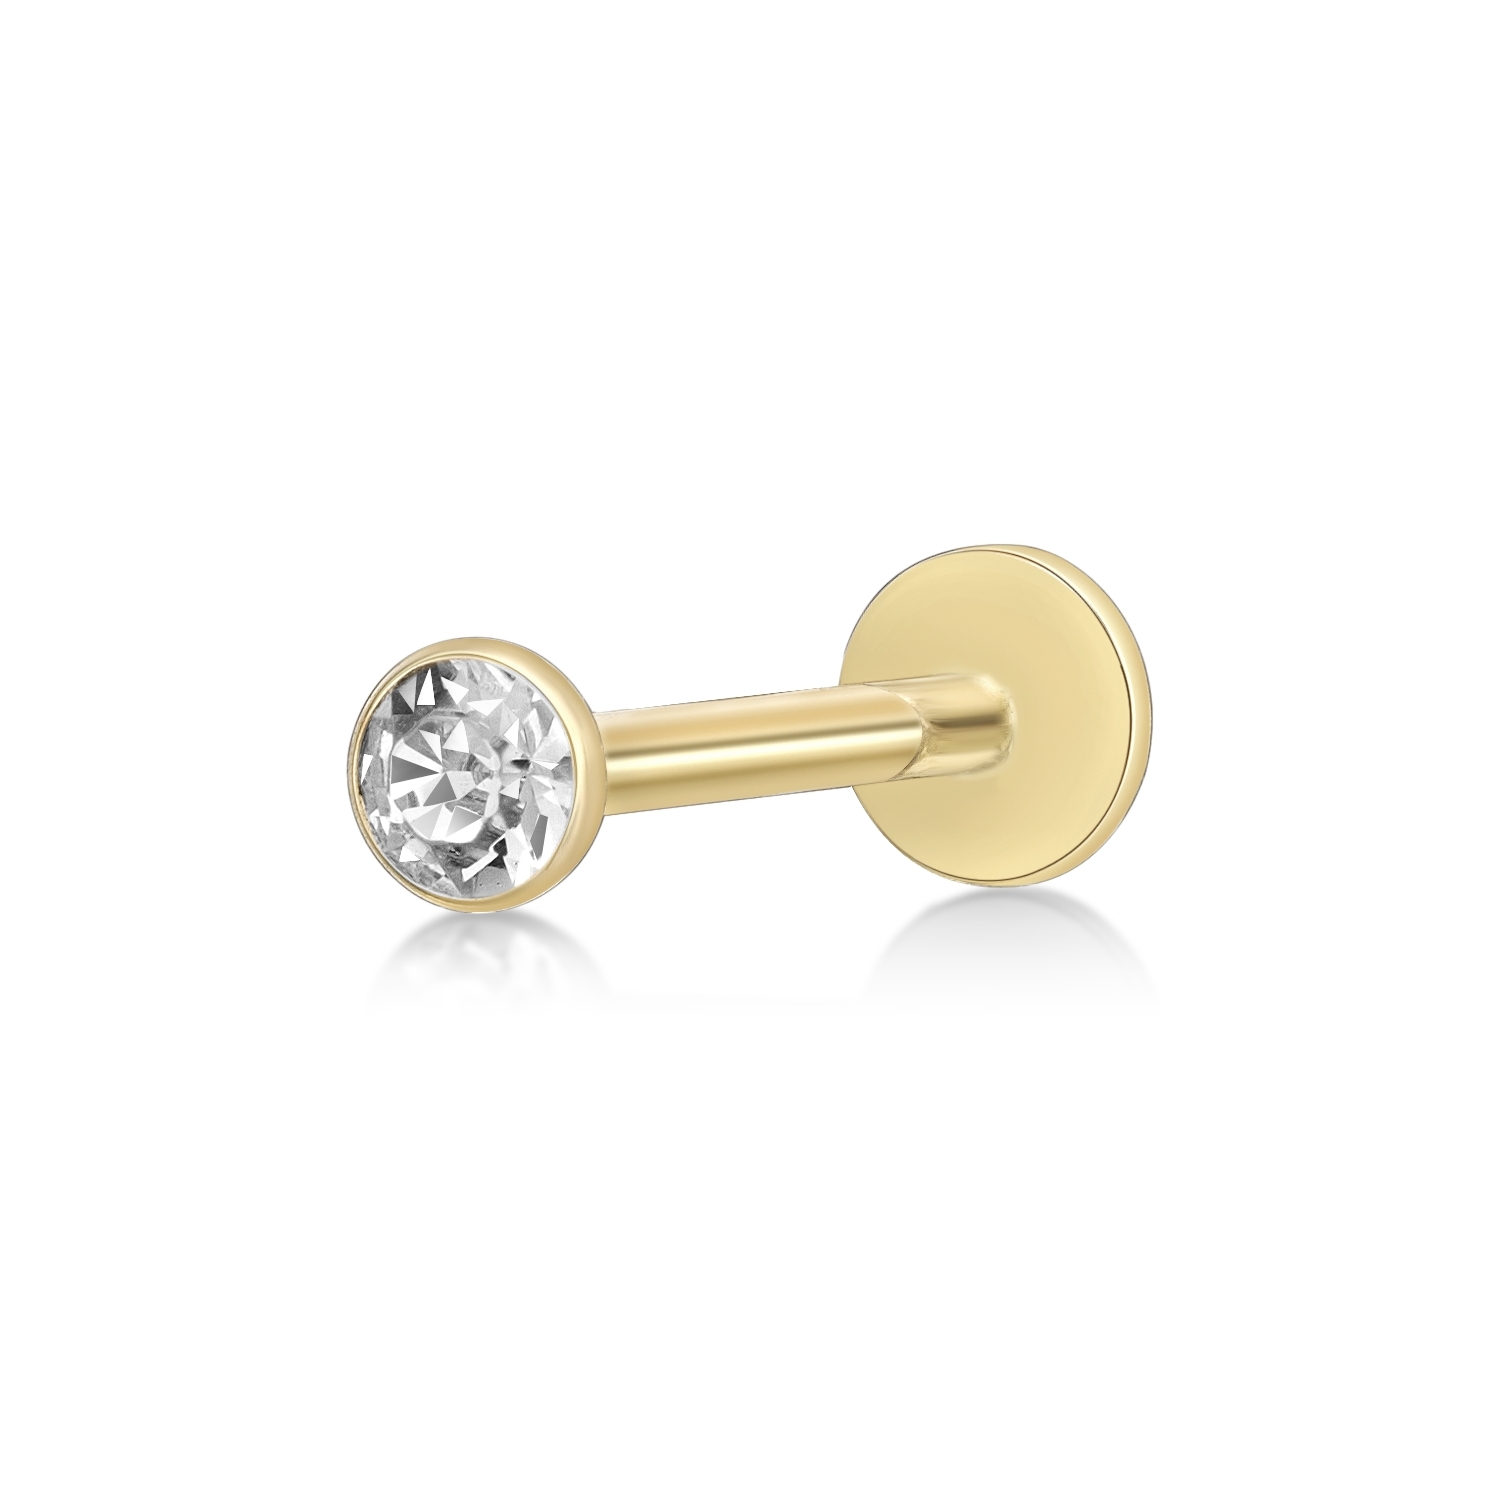 50622-lip-ring-the-piercer-yellow-gold-swarovski-crystal-50622-4.jpg